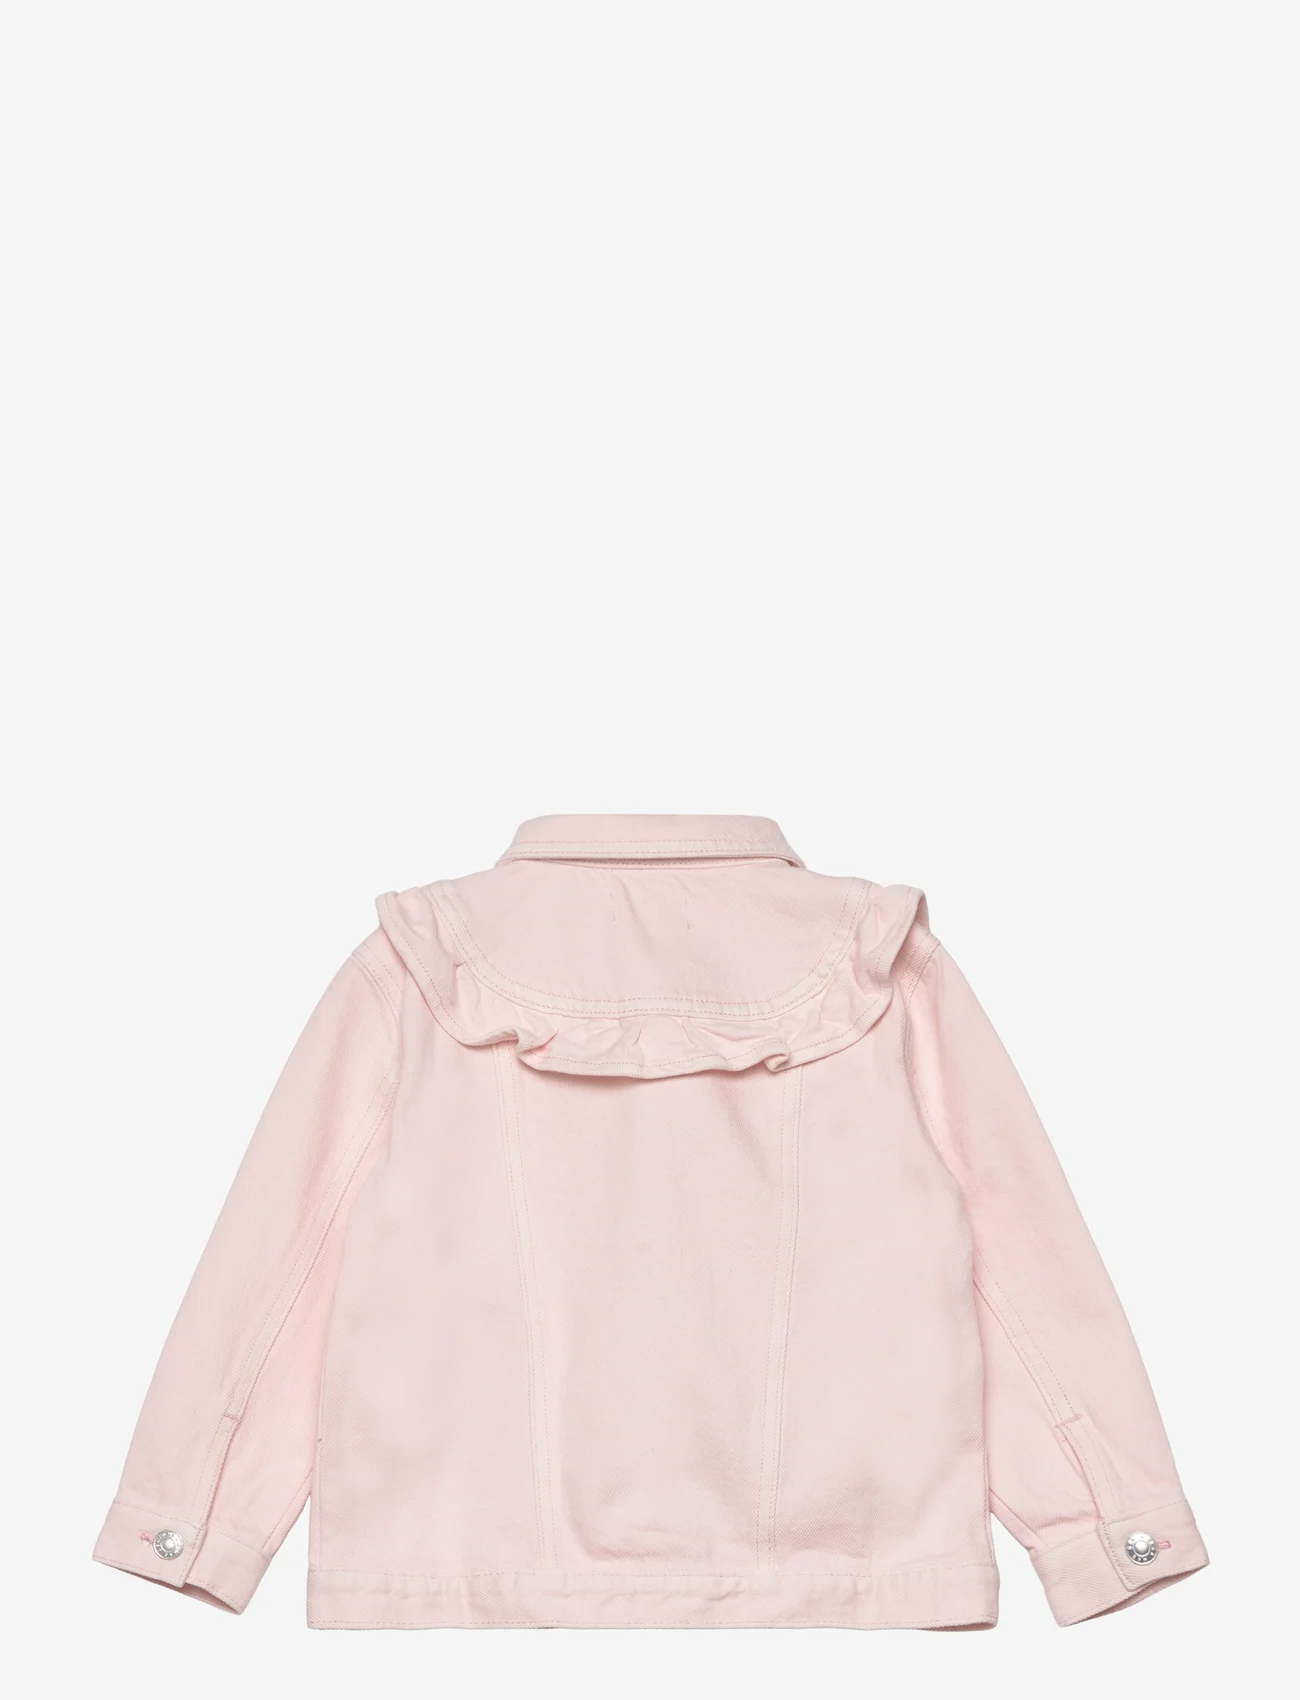 Mango - Ruffled denim jacket - jeansjacken - pink - 1